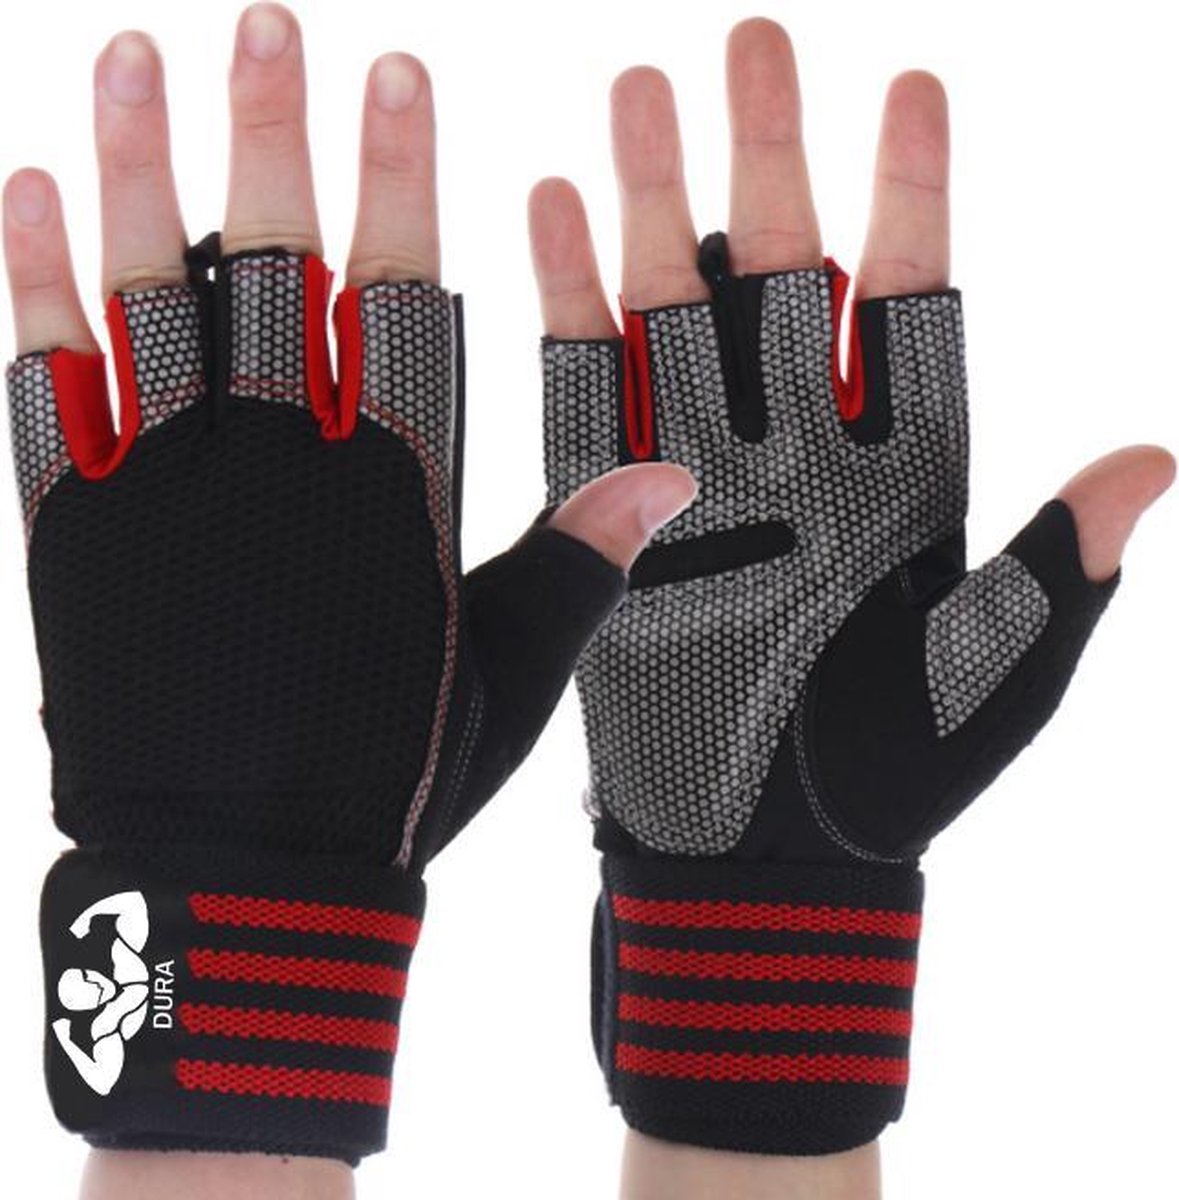 DURA Premium Fitness Gloves - Fitness handschoenen - Gewichthefhandschoenen - Sporthandschoenen - Fit Sport - Rood - L